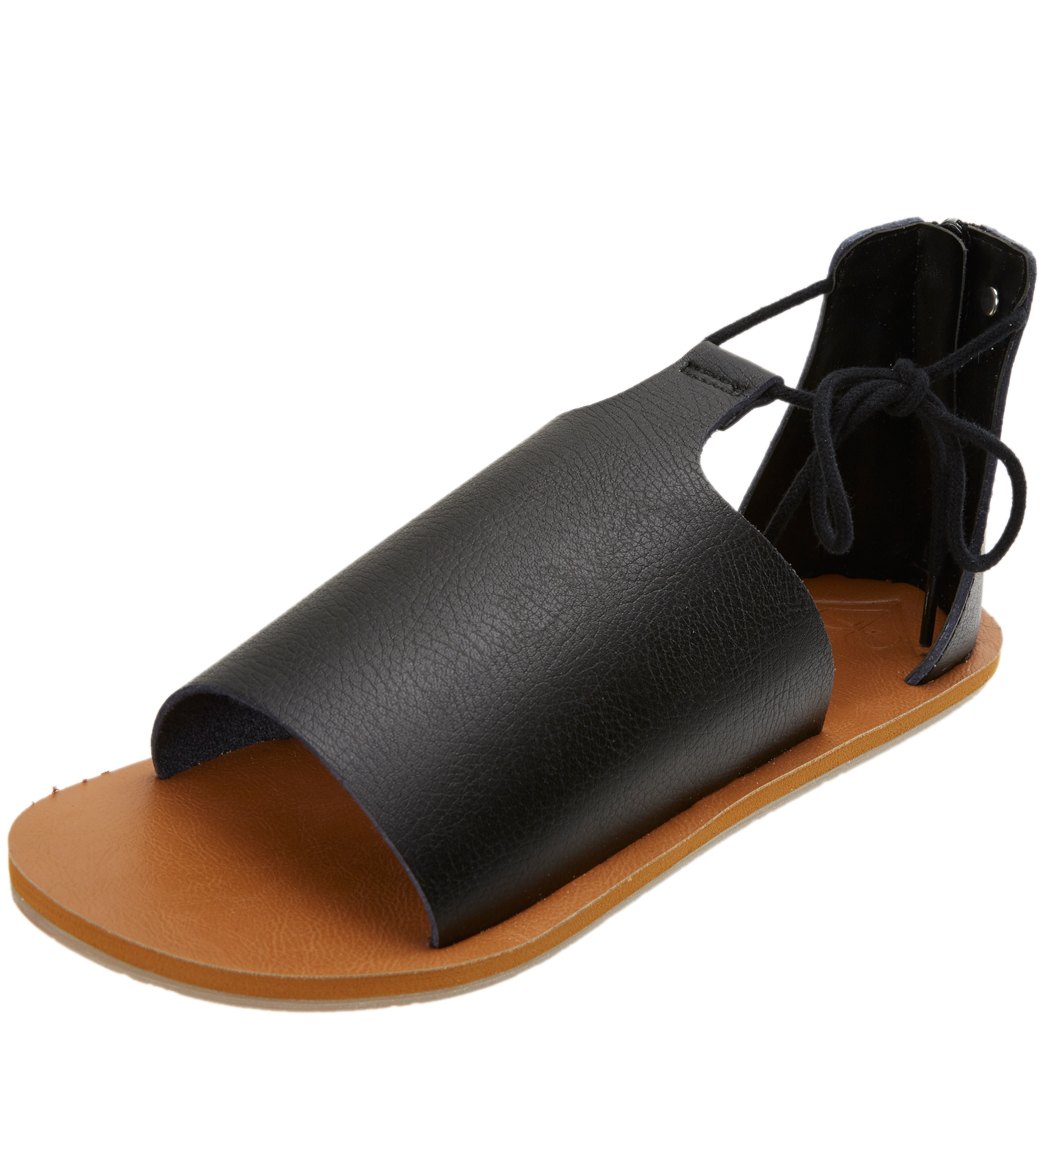 Roxy Women's Katya Side Tie Sandals - Black 6 - Swimoutlet.com